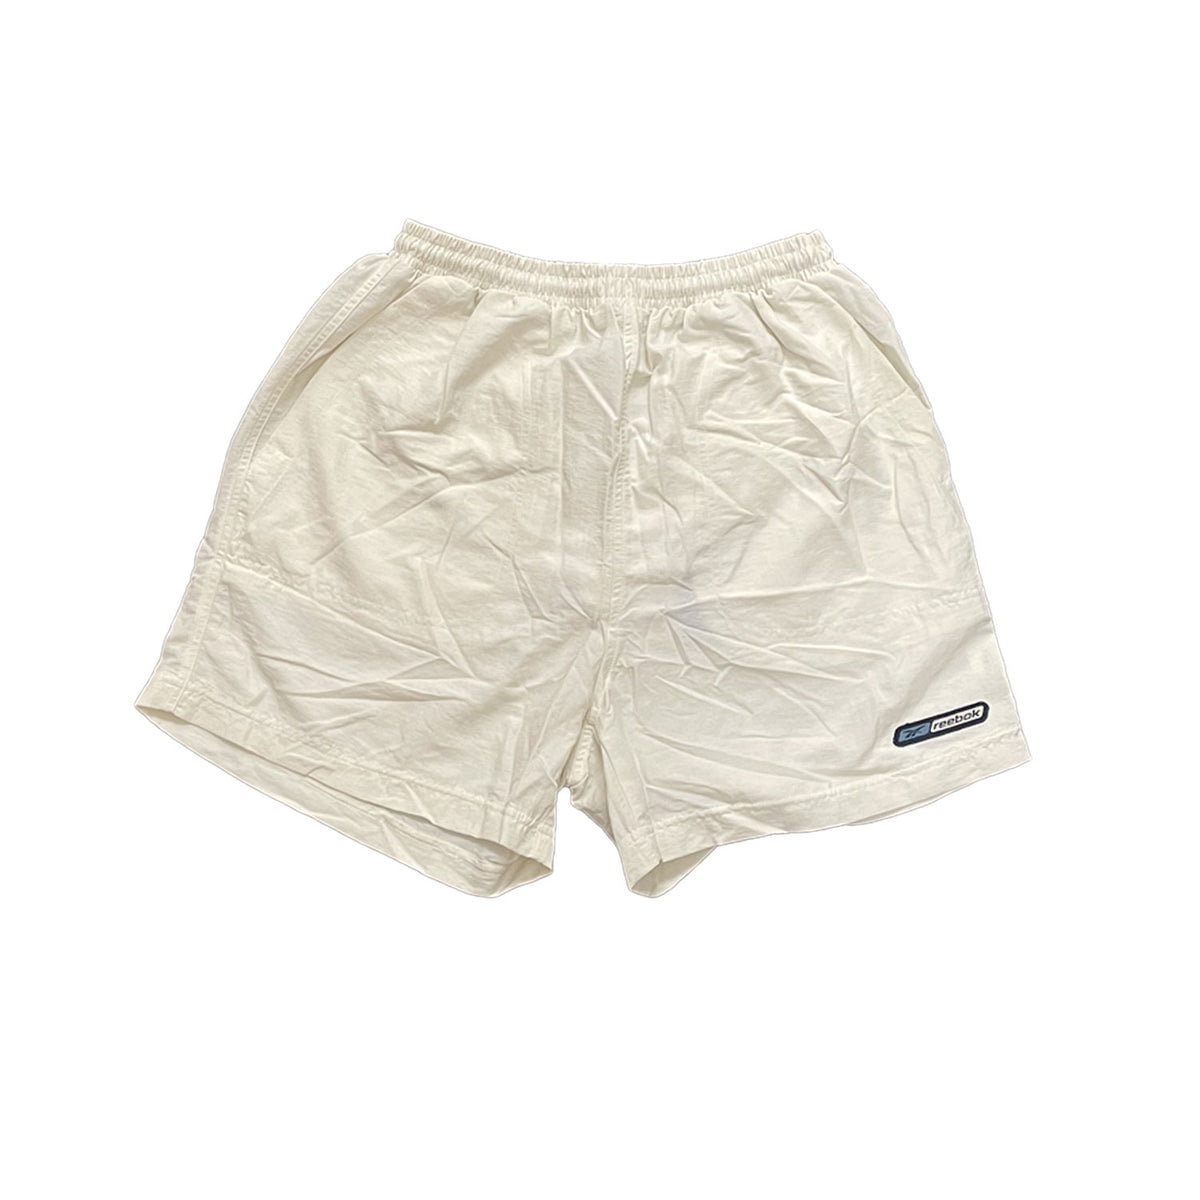 Reebok Original Clearance Hydromove Athletic Shorts